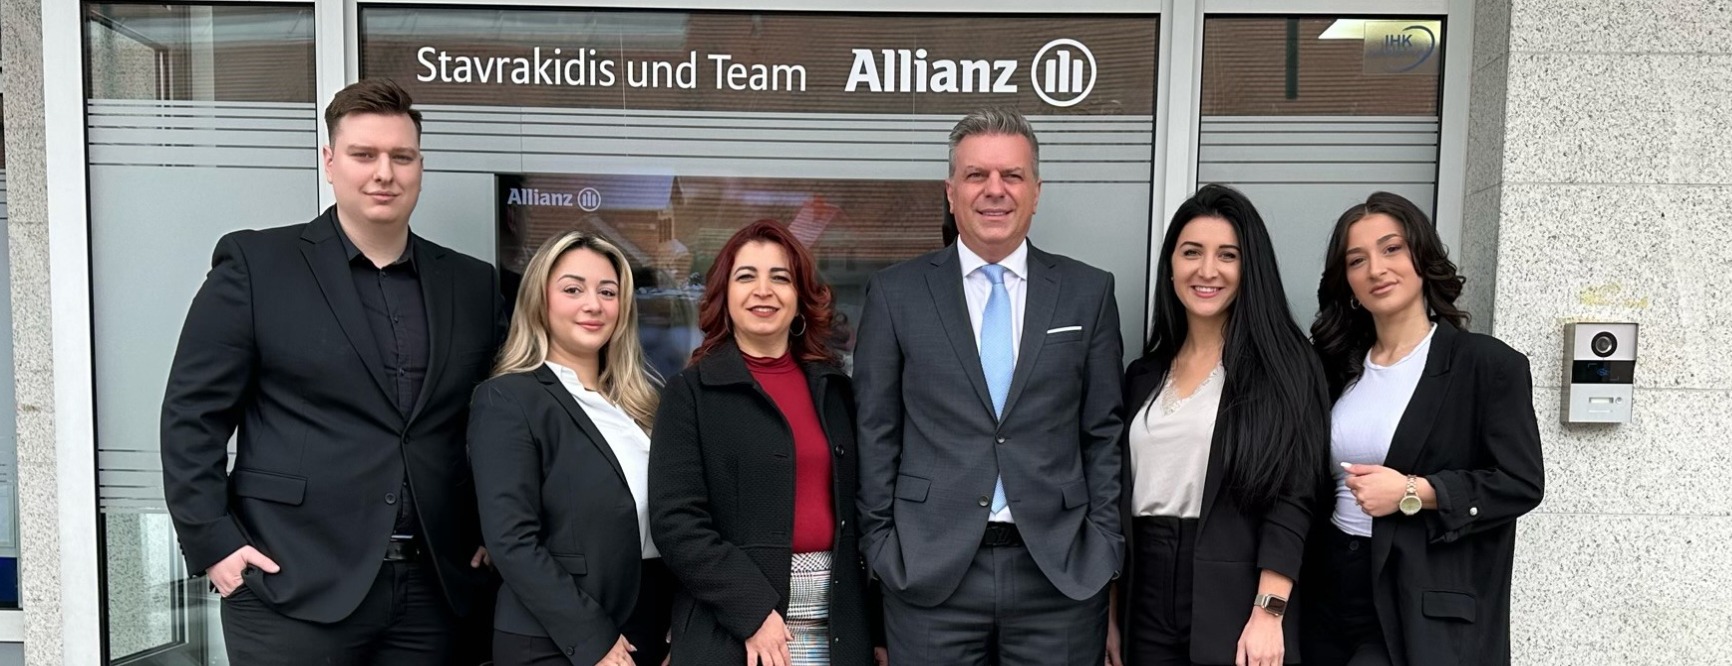 Allianz Versicherung Konstantinos Stavrakidis Stuttgart - griechisch asfalia aftokinito 